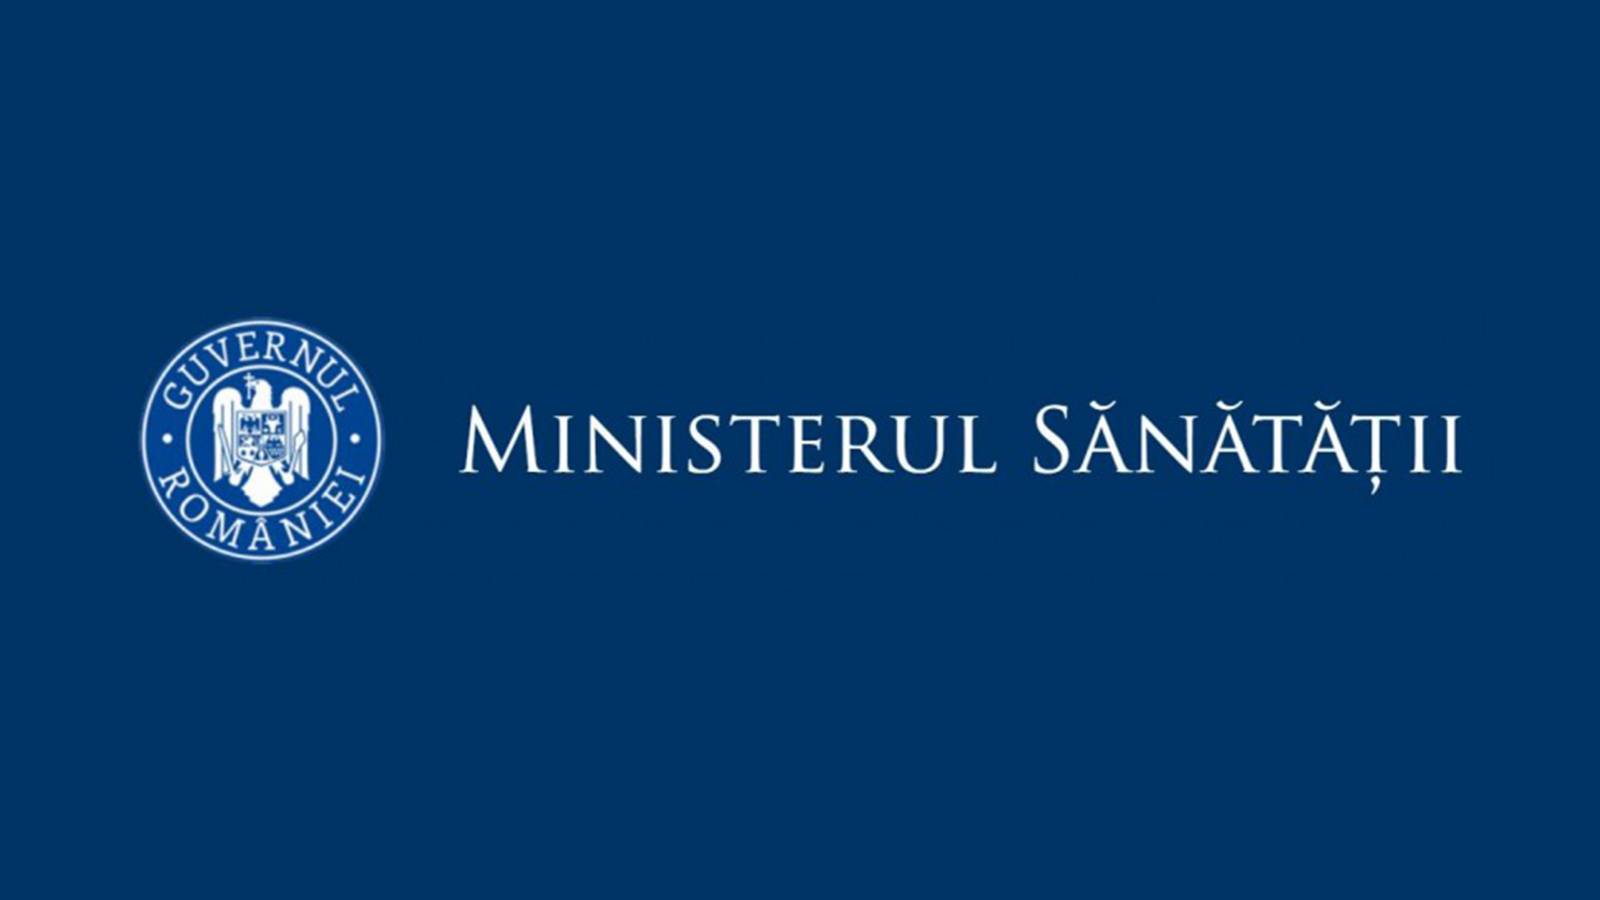 Ministerul Sanatatii record decese 7 august